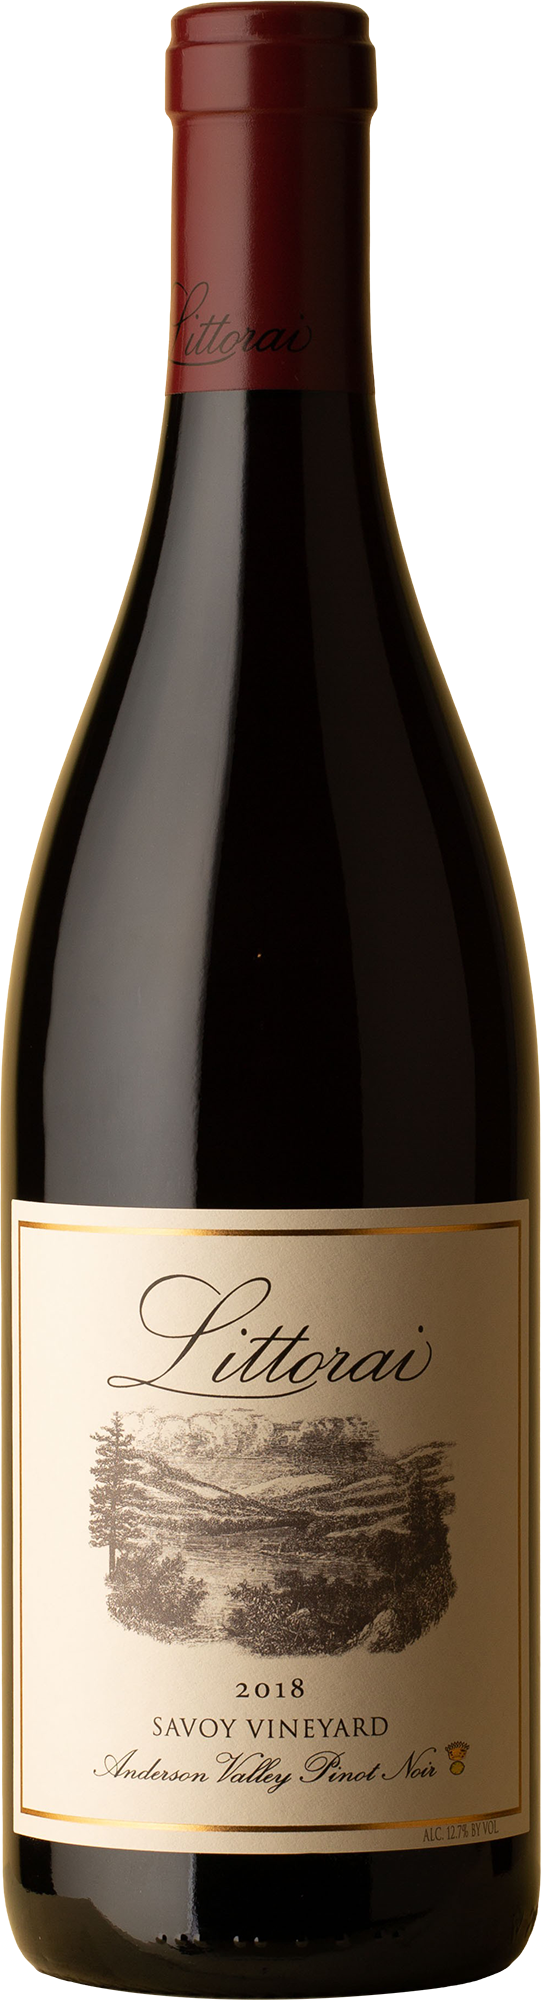 Littorai - Savoy Vineyard Pinot Noir 2018 Red Wine